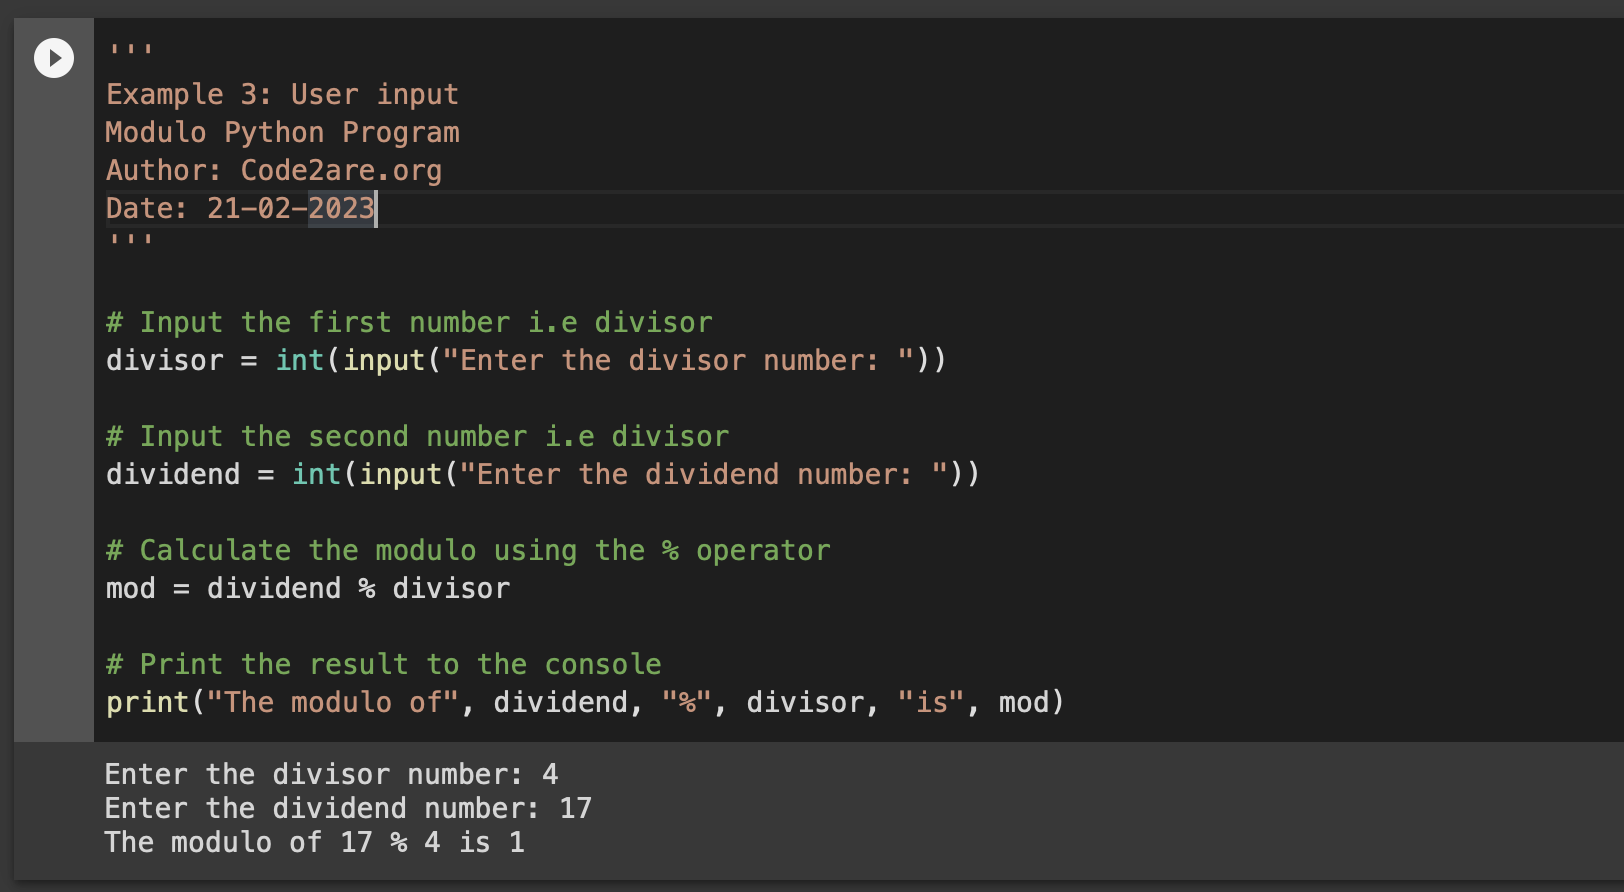 Python Modulo Program Code and result